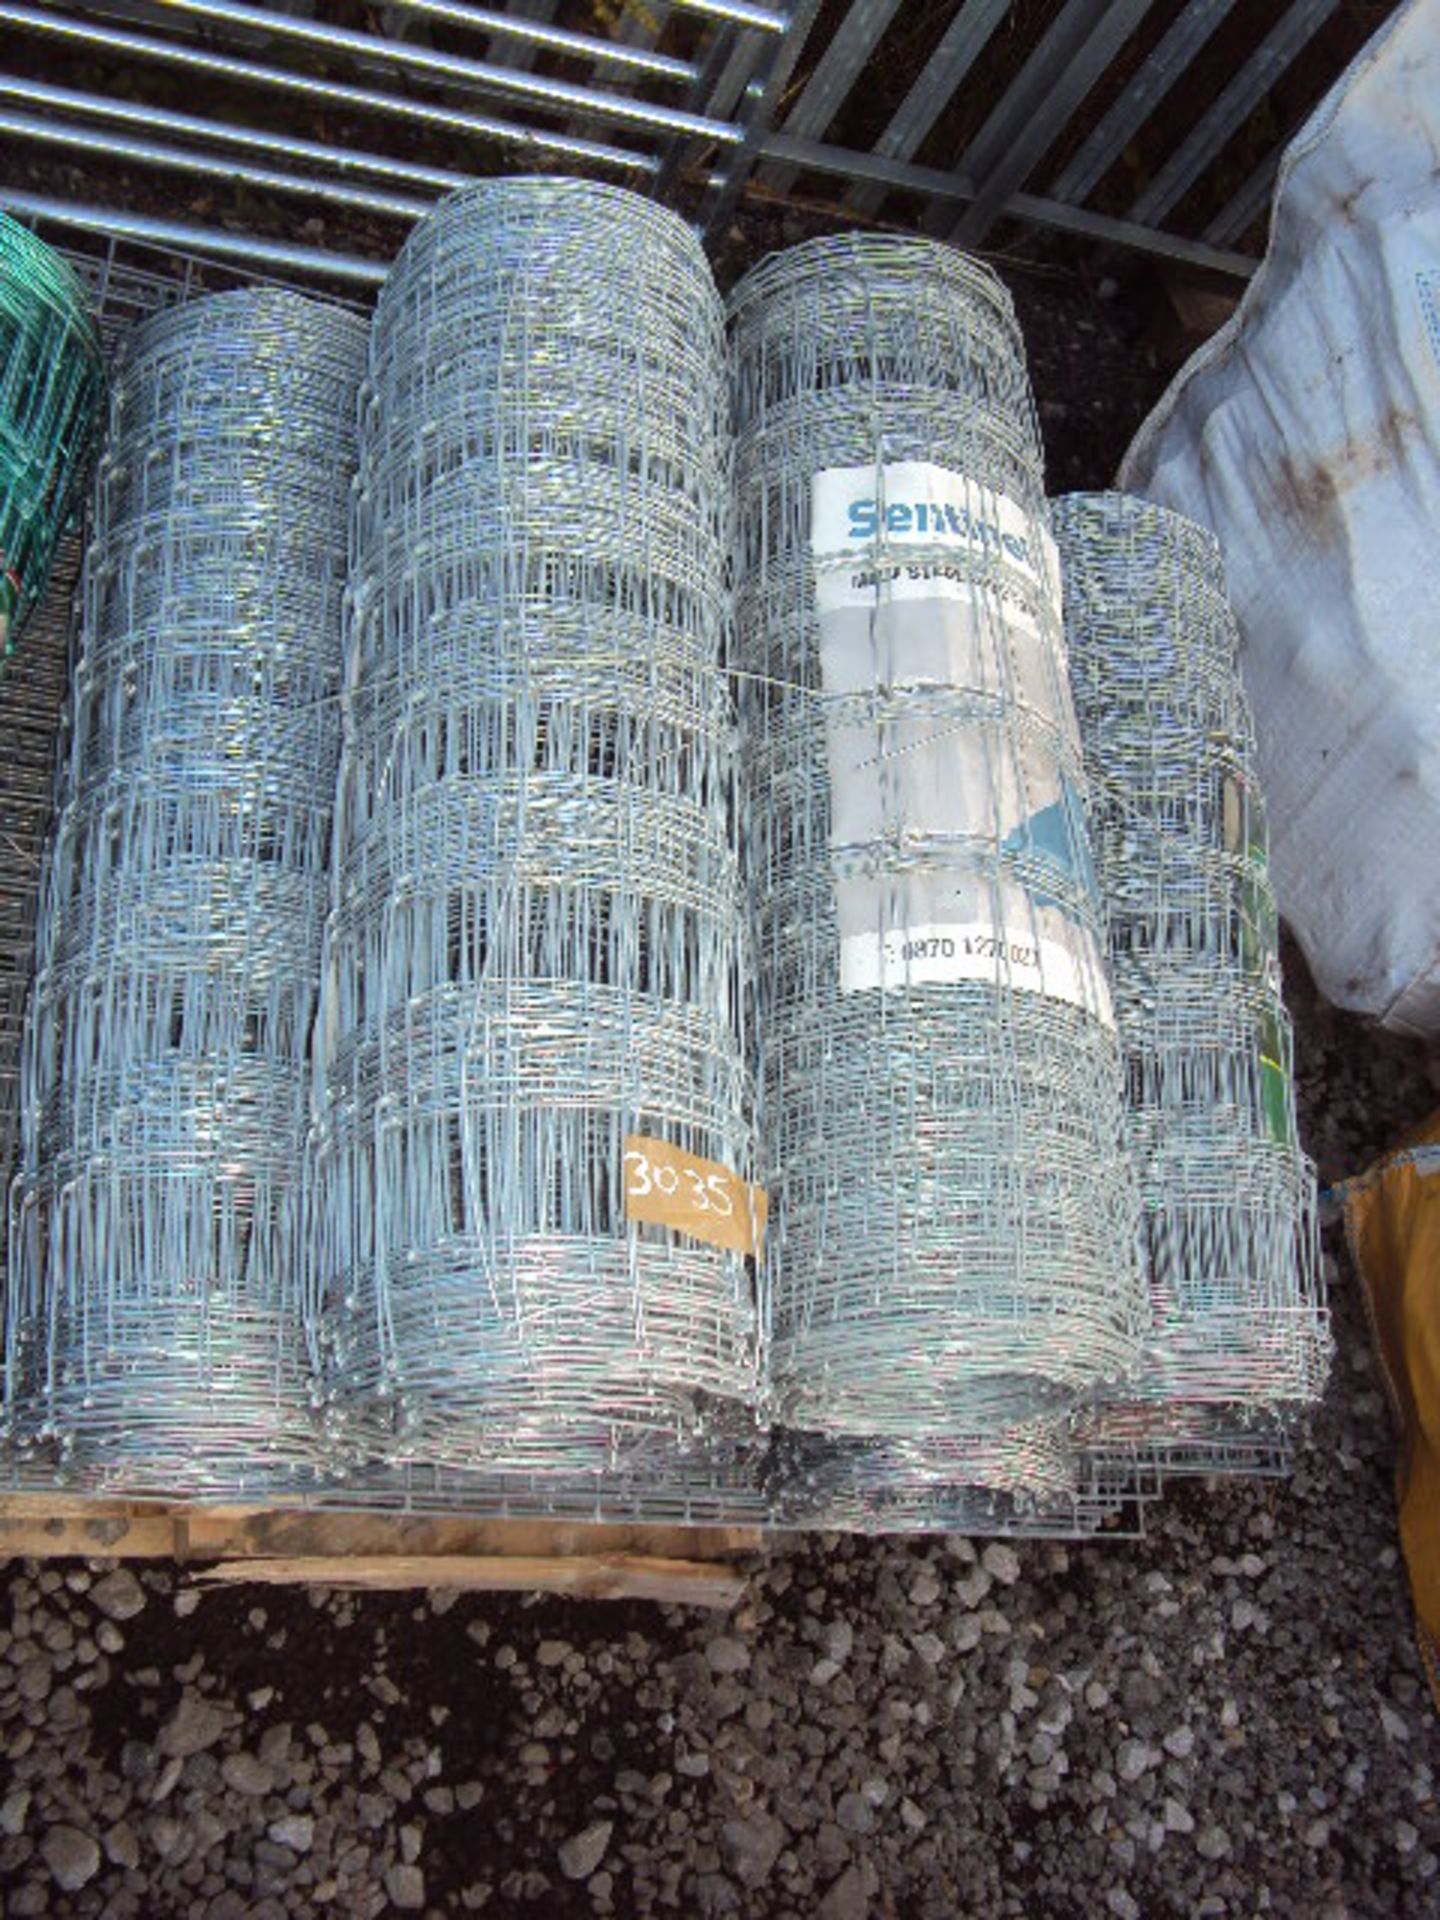 6 x rolls of galvanised stock netting